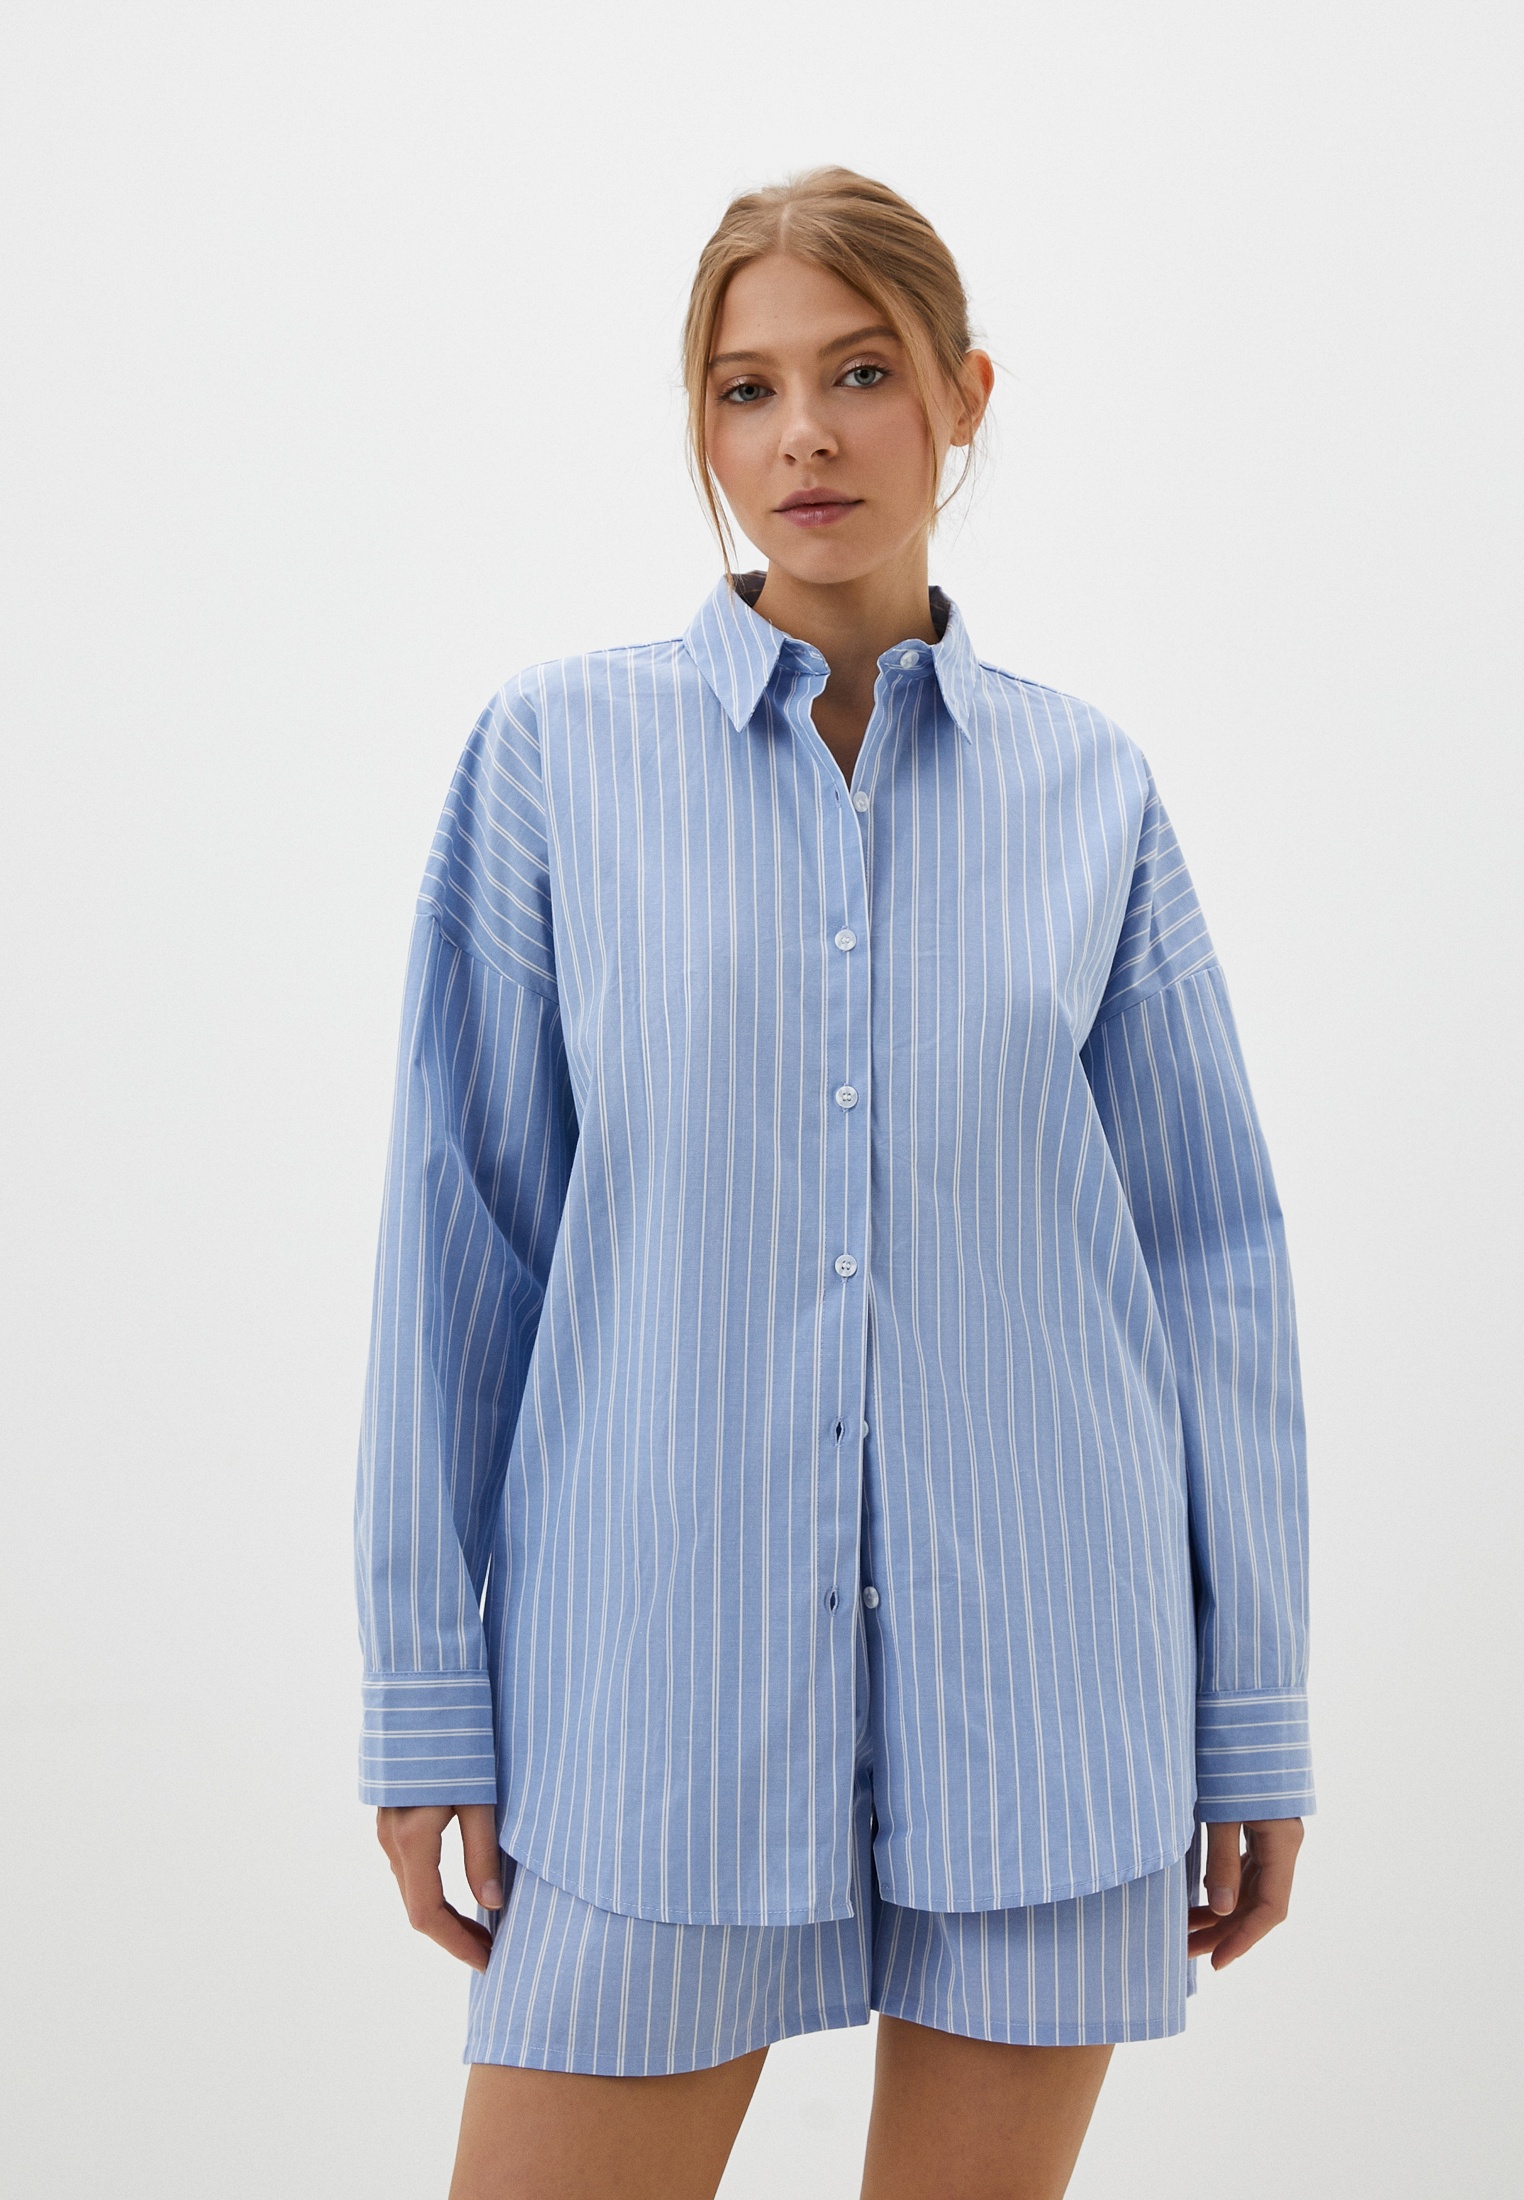 Пижама Indefini, цвет: голубой, MP002XW0Z76T — купить в интернет-магазине Lamoda